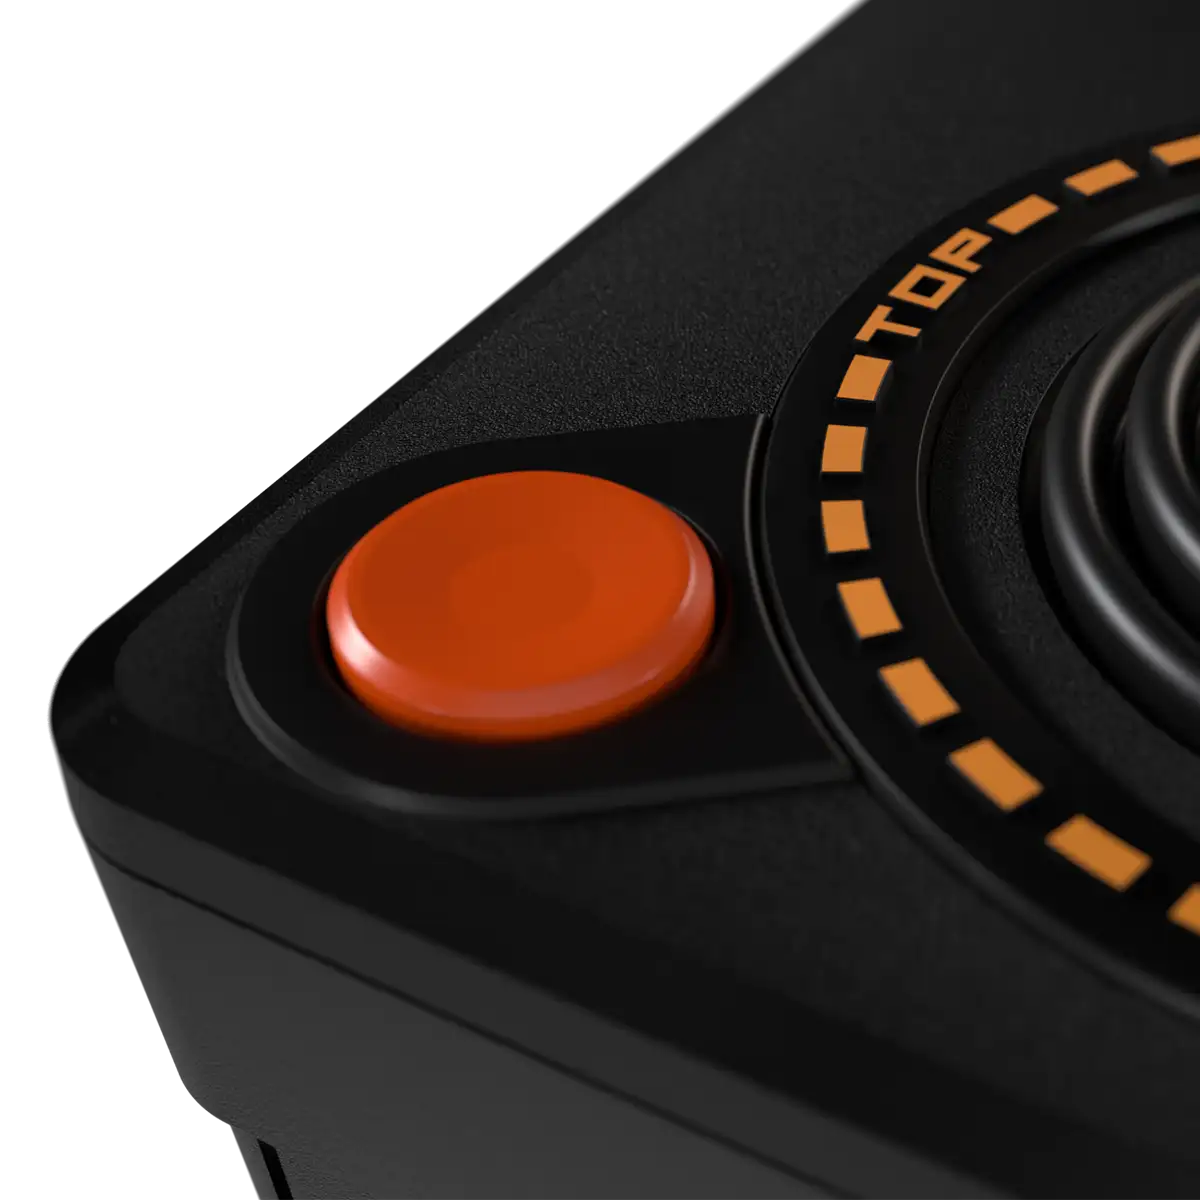 THECXSTICK (Solus Atari USB Joystick - Black) Image 6